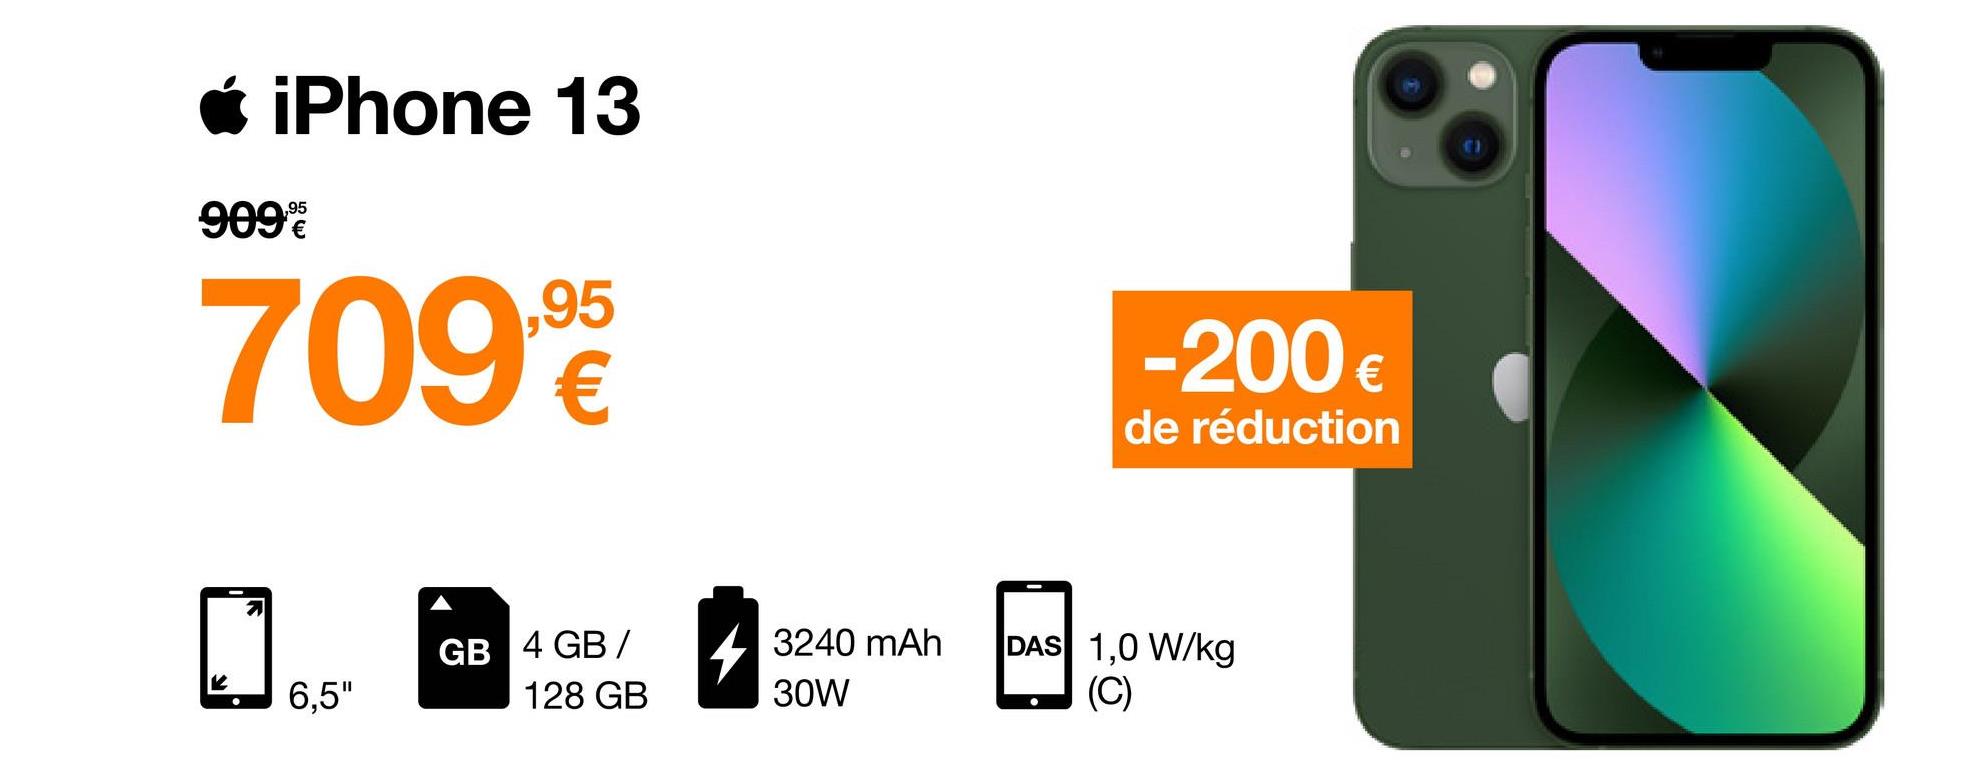 iPhone 13
909%
709,90
€
6,5"
GB 4 GB/
128 GB
3240 mAh
30W
-200 €
de réduction
DAS 1,0 W/kg
(C)
●